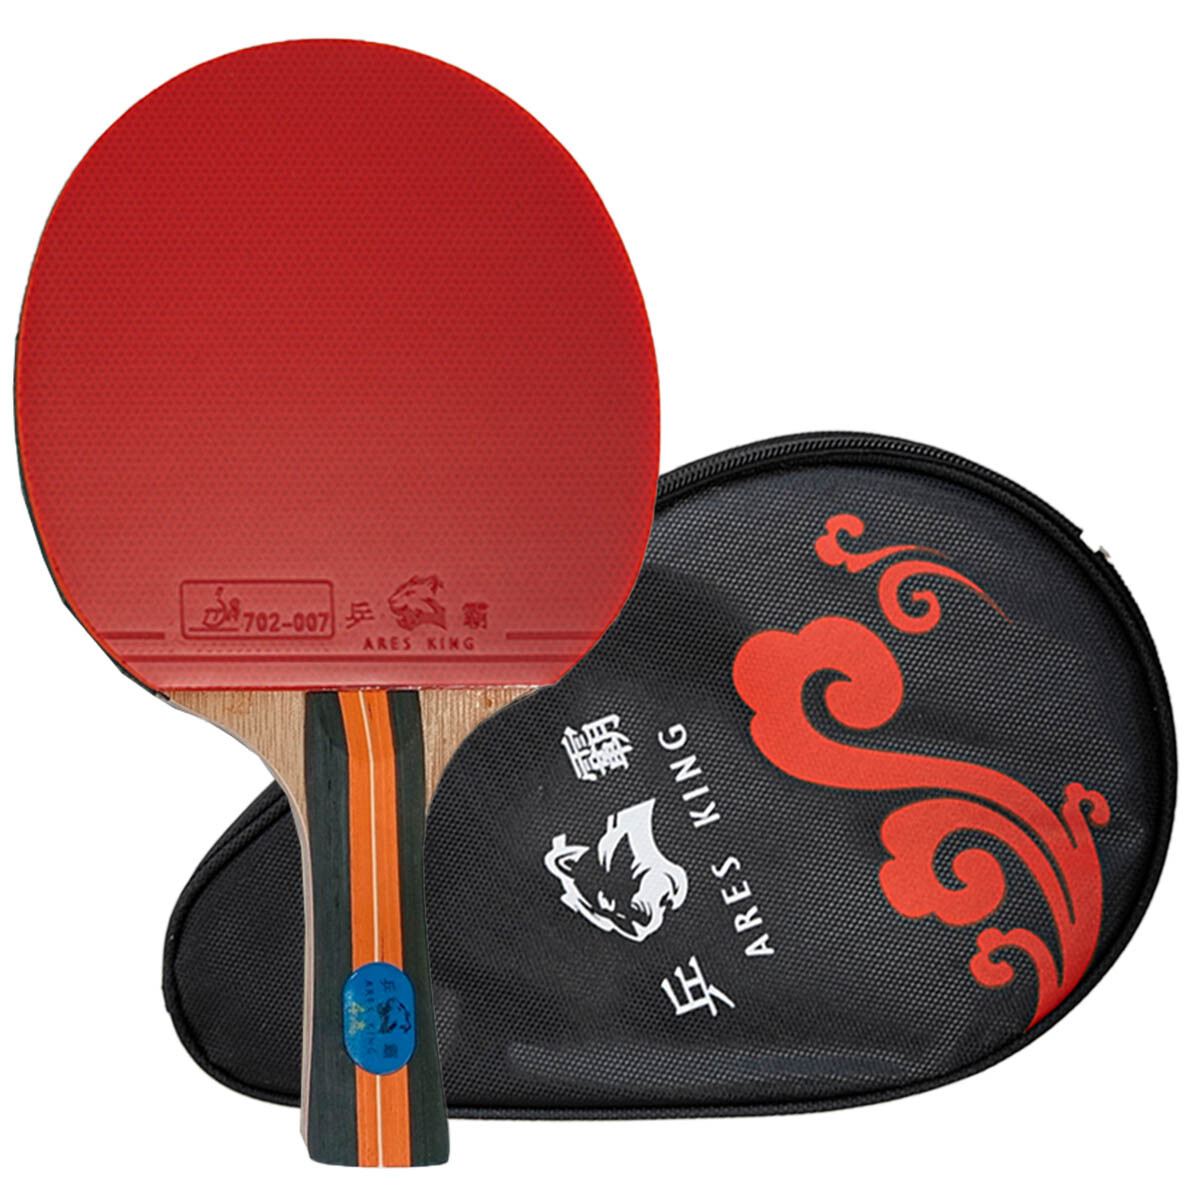 Paleta De Ping Pong 4 Estrellas Tenis De Mesa - Rojo 